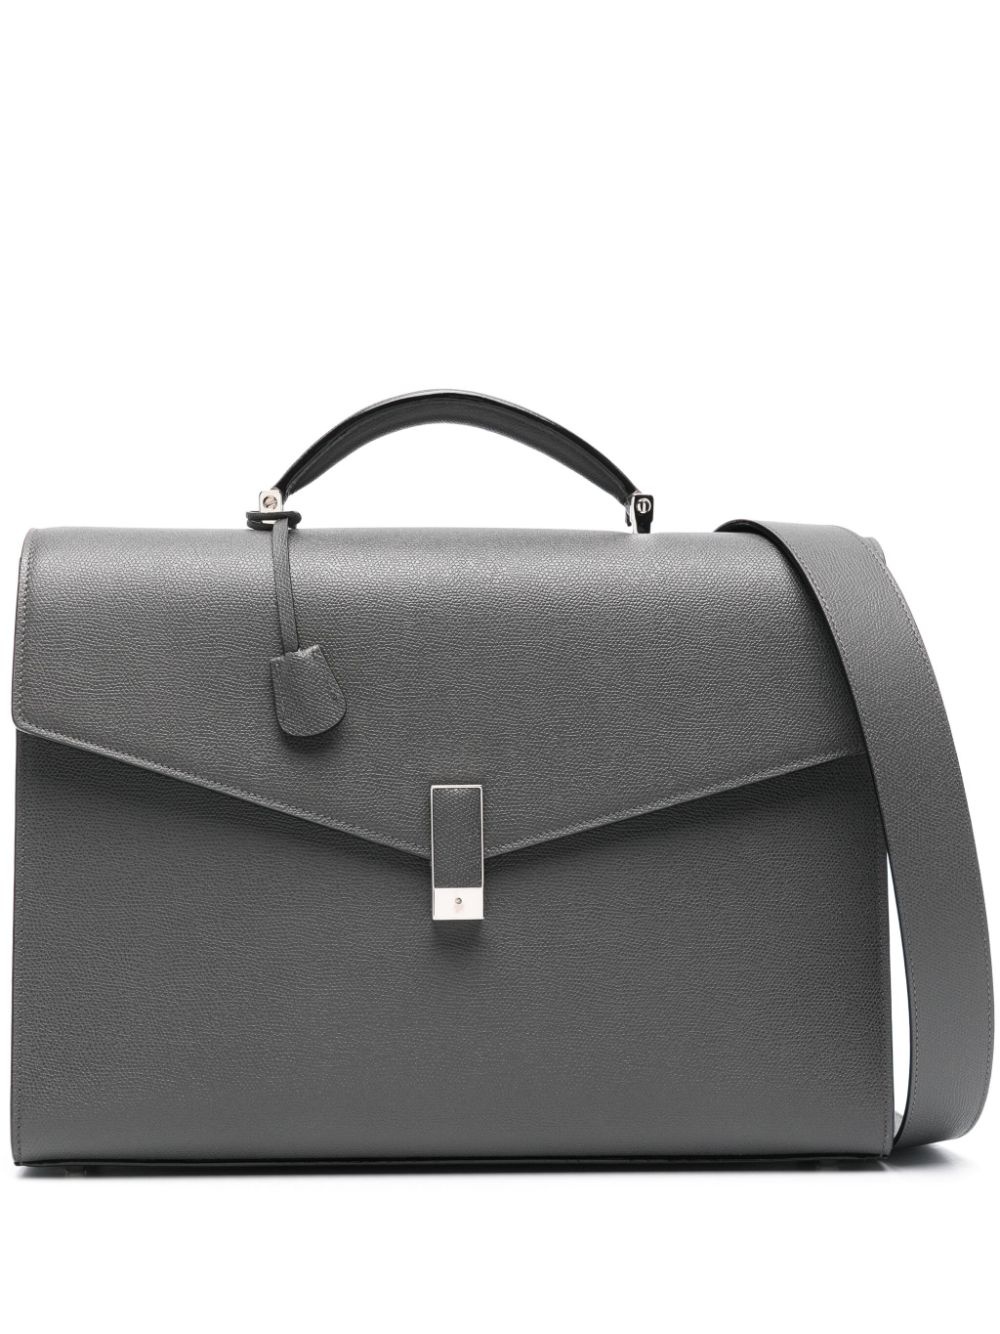 Iside leather handbag - 1